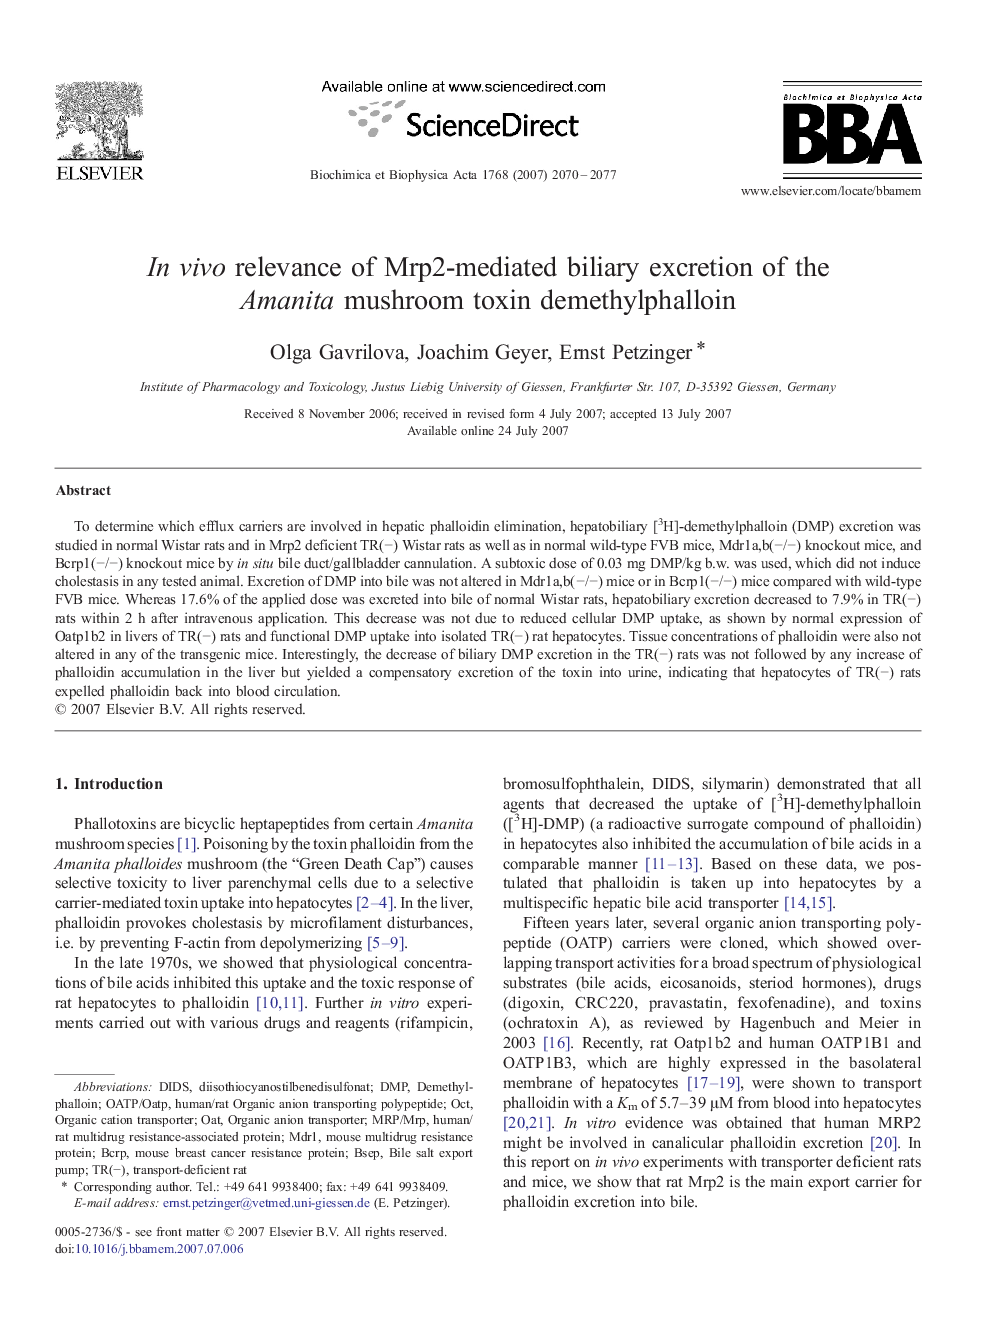 In vivo relevance of Mrp2-mediated biliary excretion of the Amanita mushroom toxin demethylphalloin